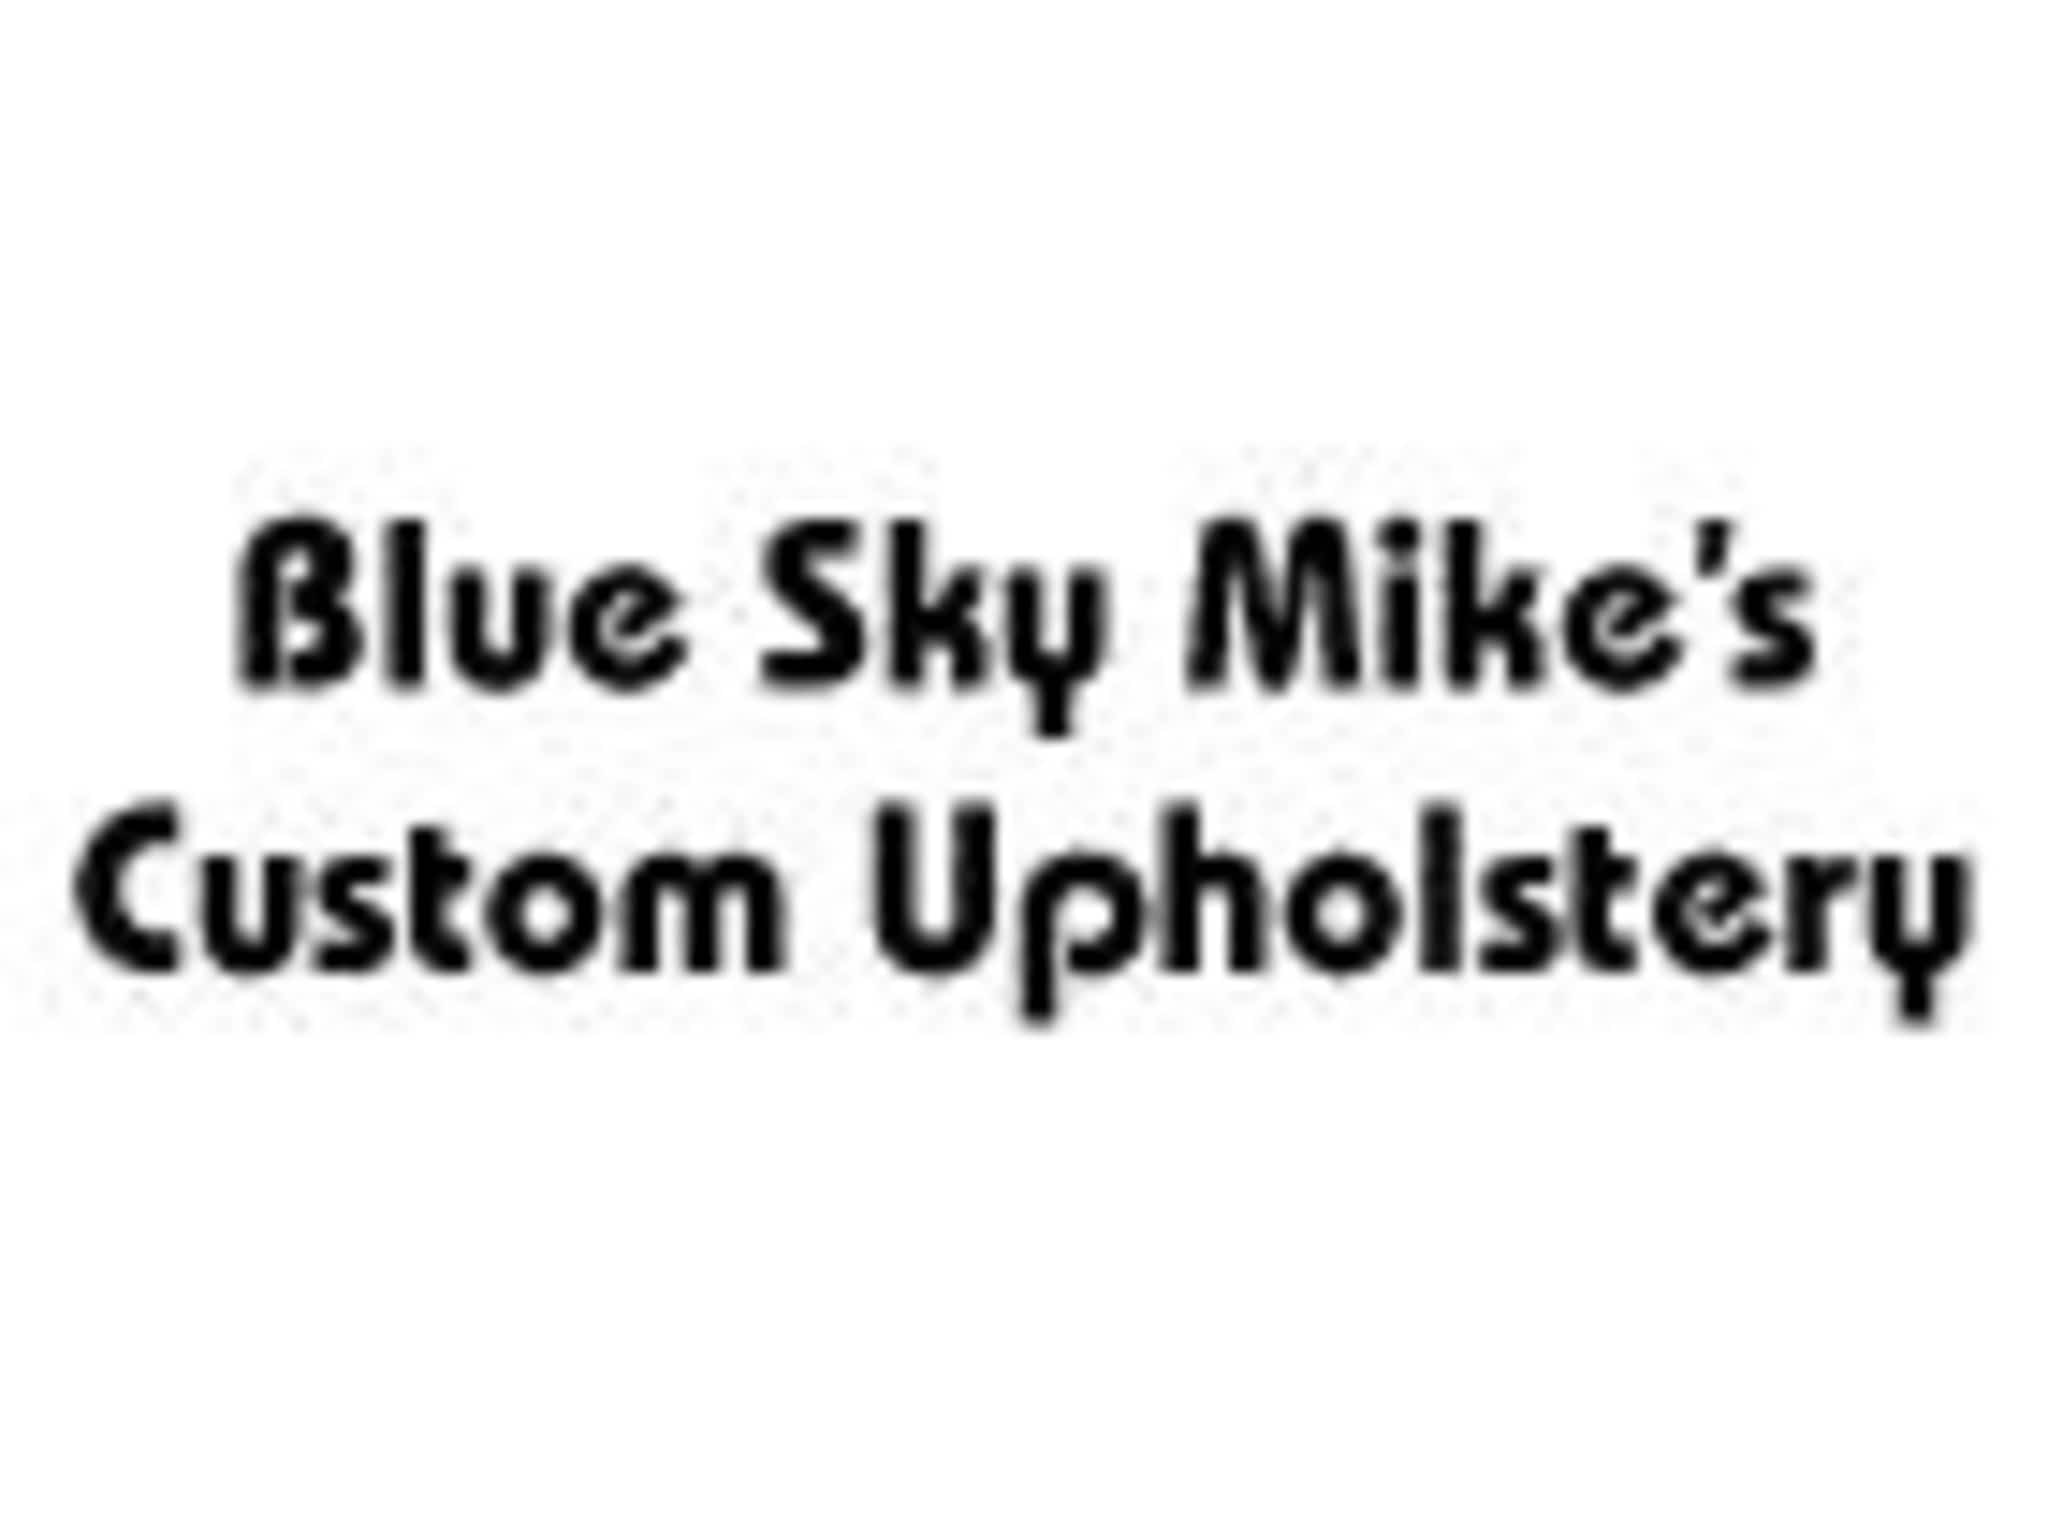 photo Blue Sky Mike's Custom Upholstery